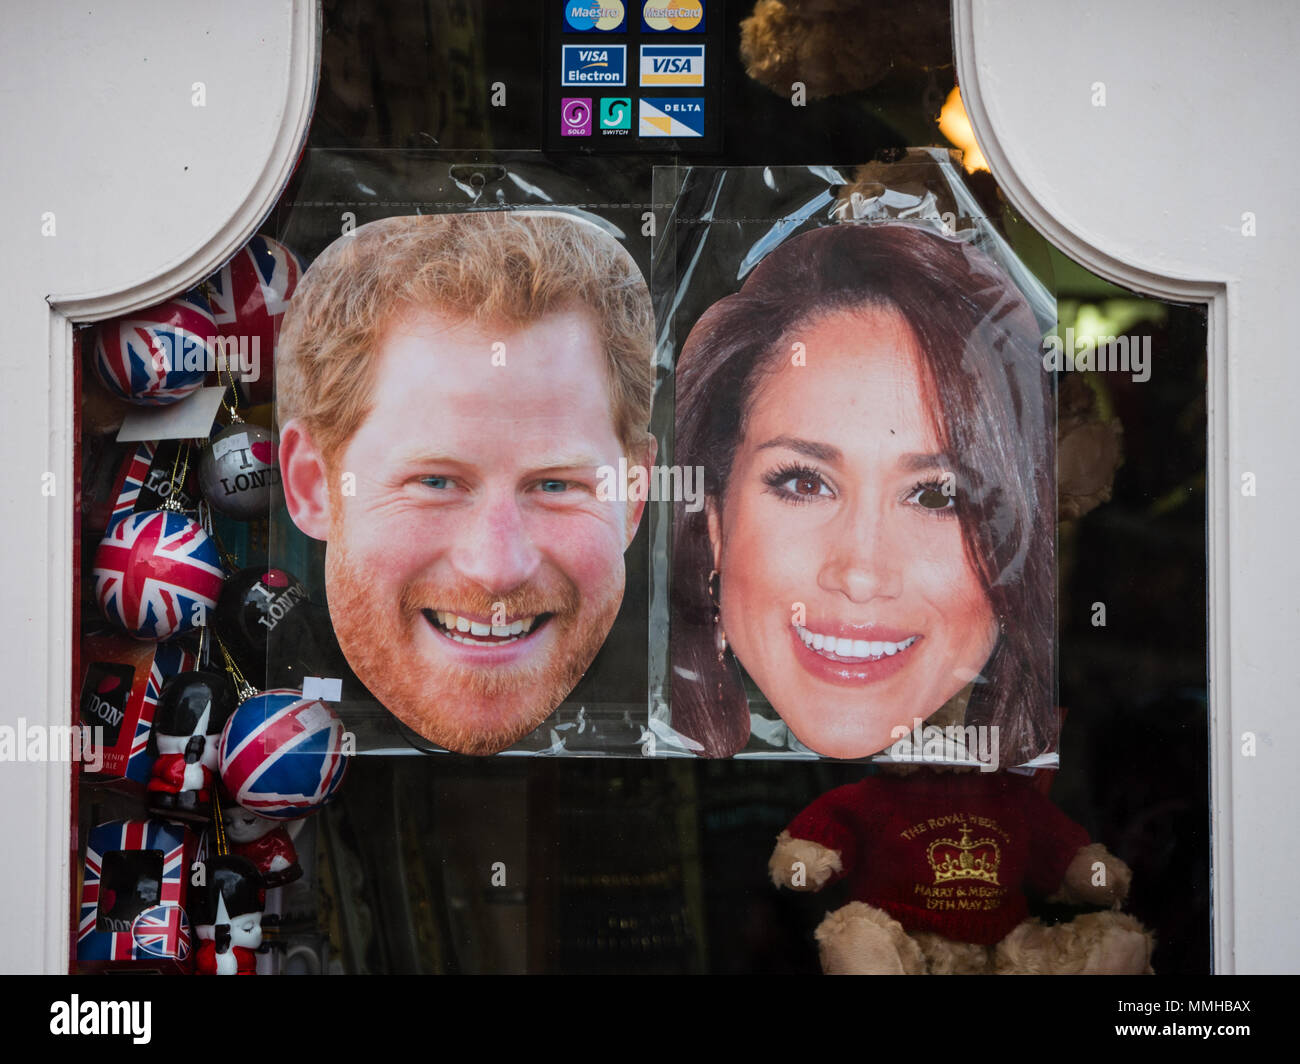 Harry e Meghan in Shop Display, Royal Wedding 2018, Windsor, Berkshire, Inghilterra, Regno Unito, GB. Foto Stock